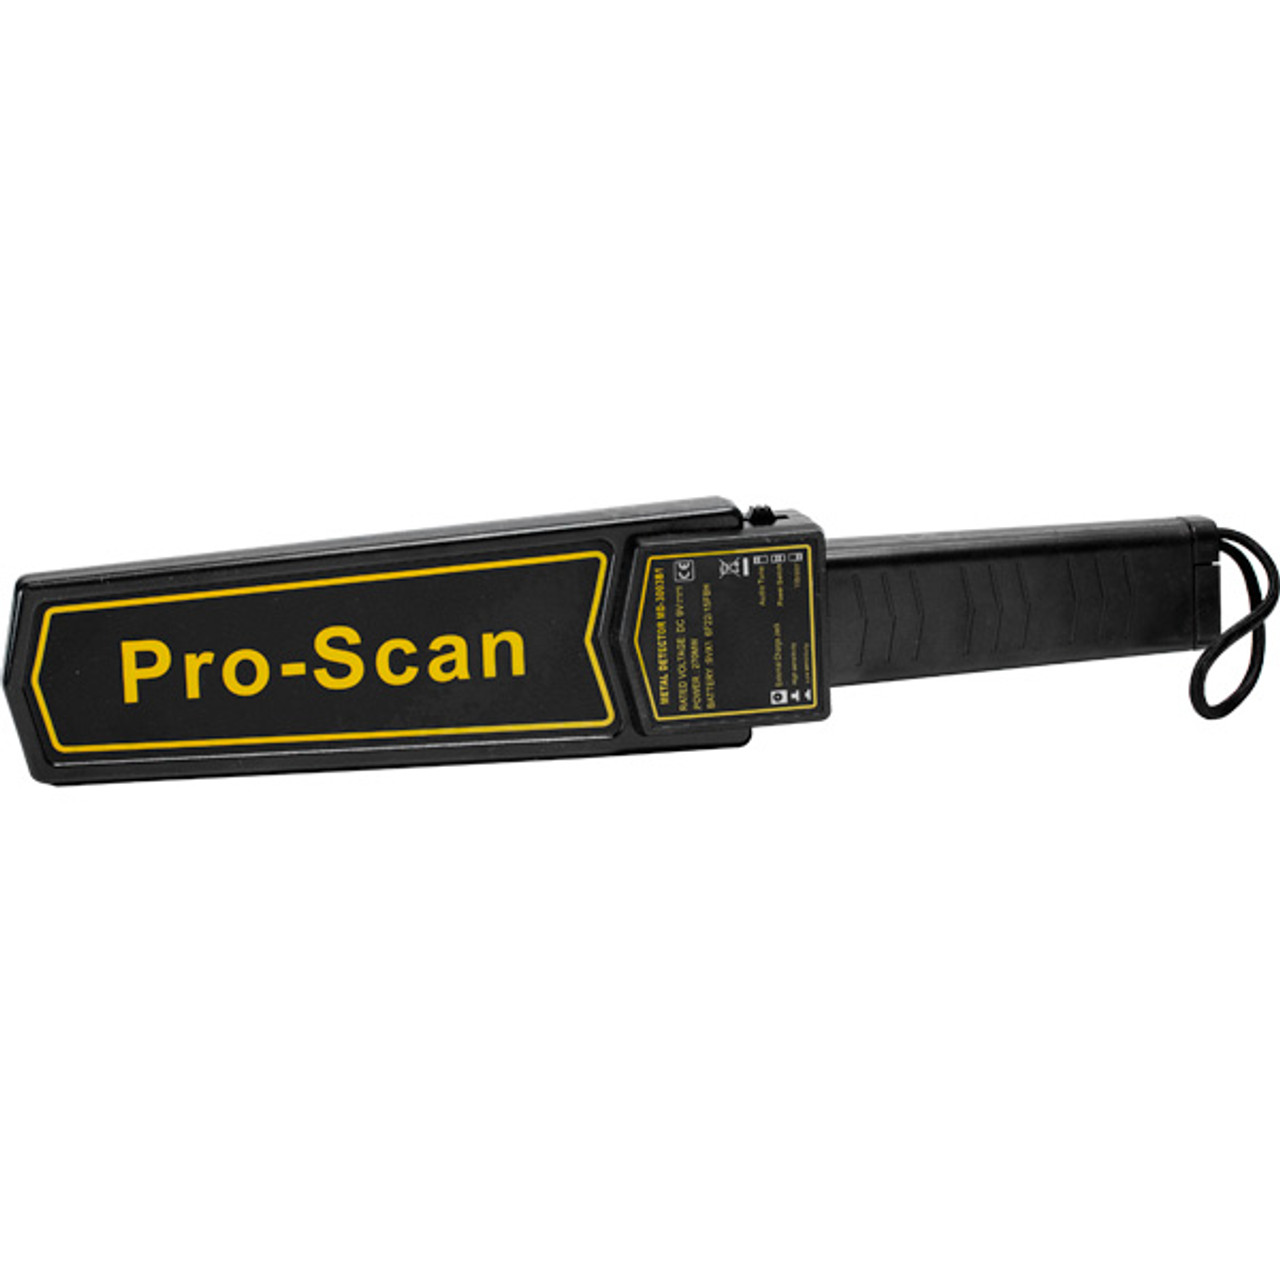 Pro Scan Security Scanner Hand Held Metal Detector Sex Pic Hd